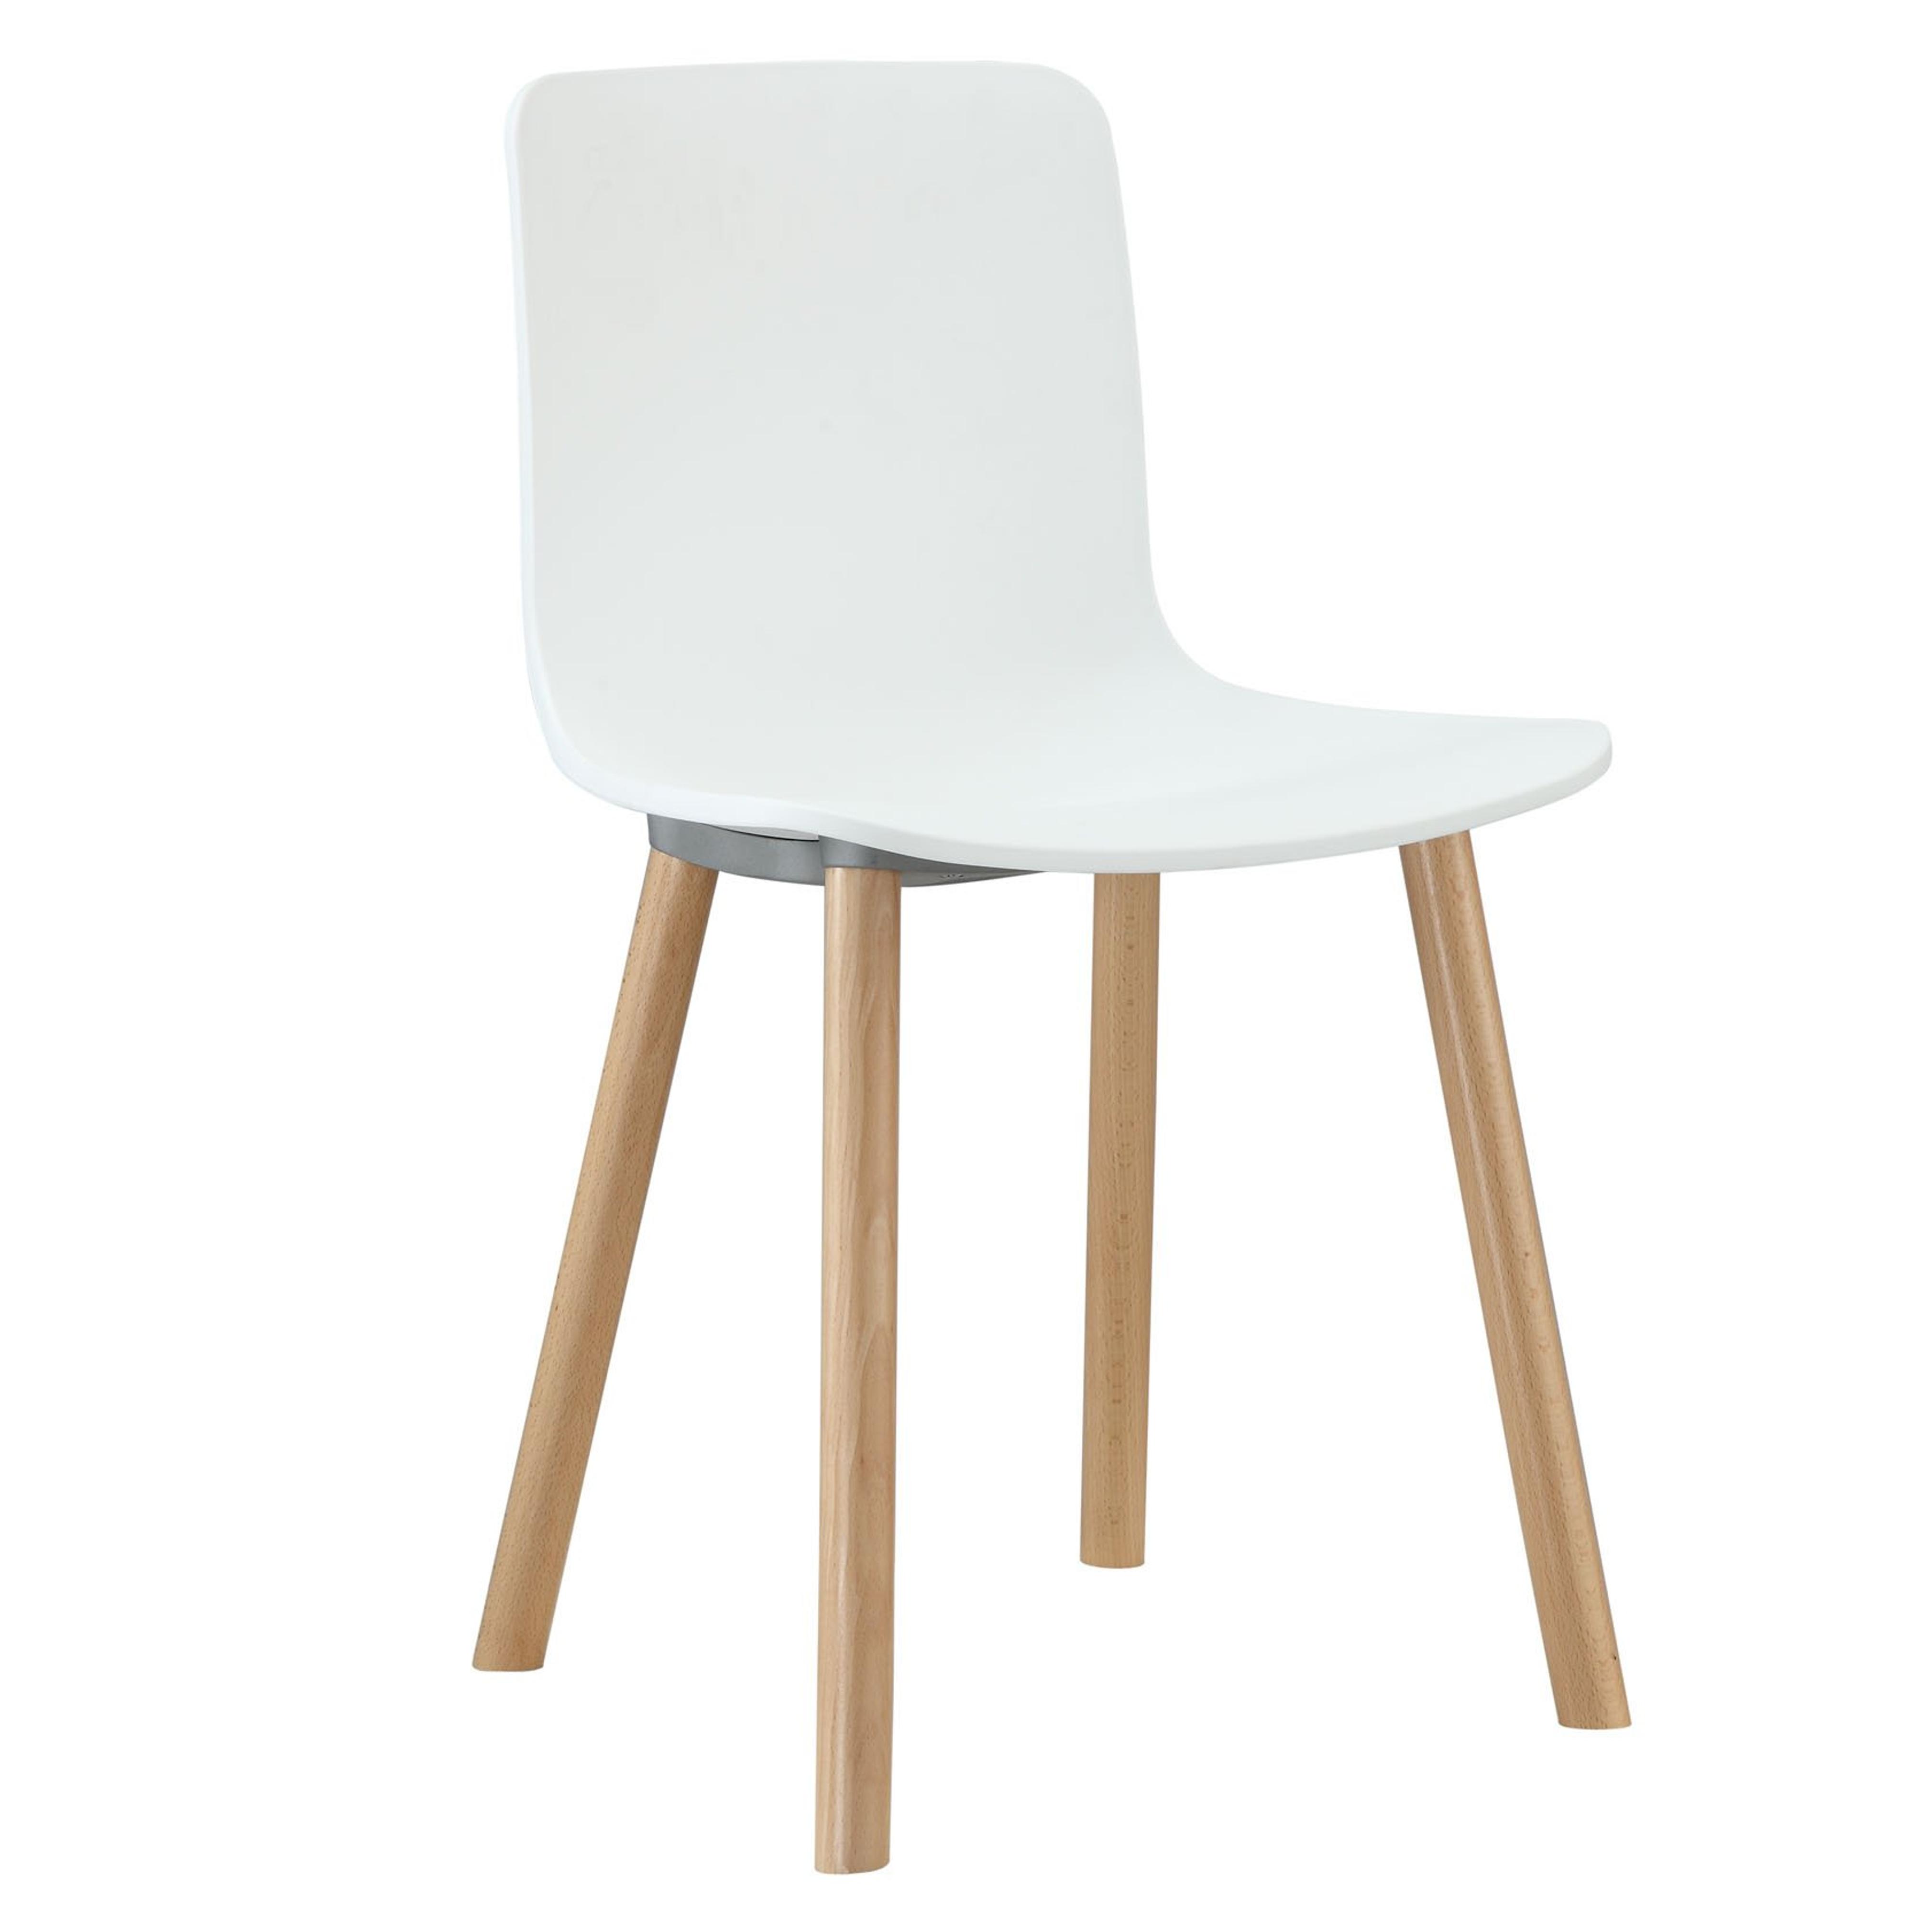 LexMod Sprung White Plastic Modern Dining Chair